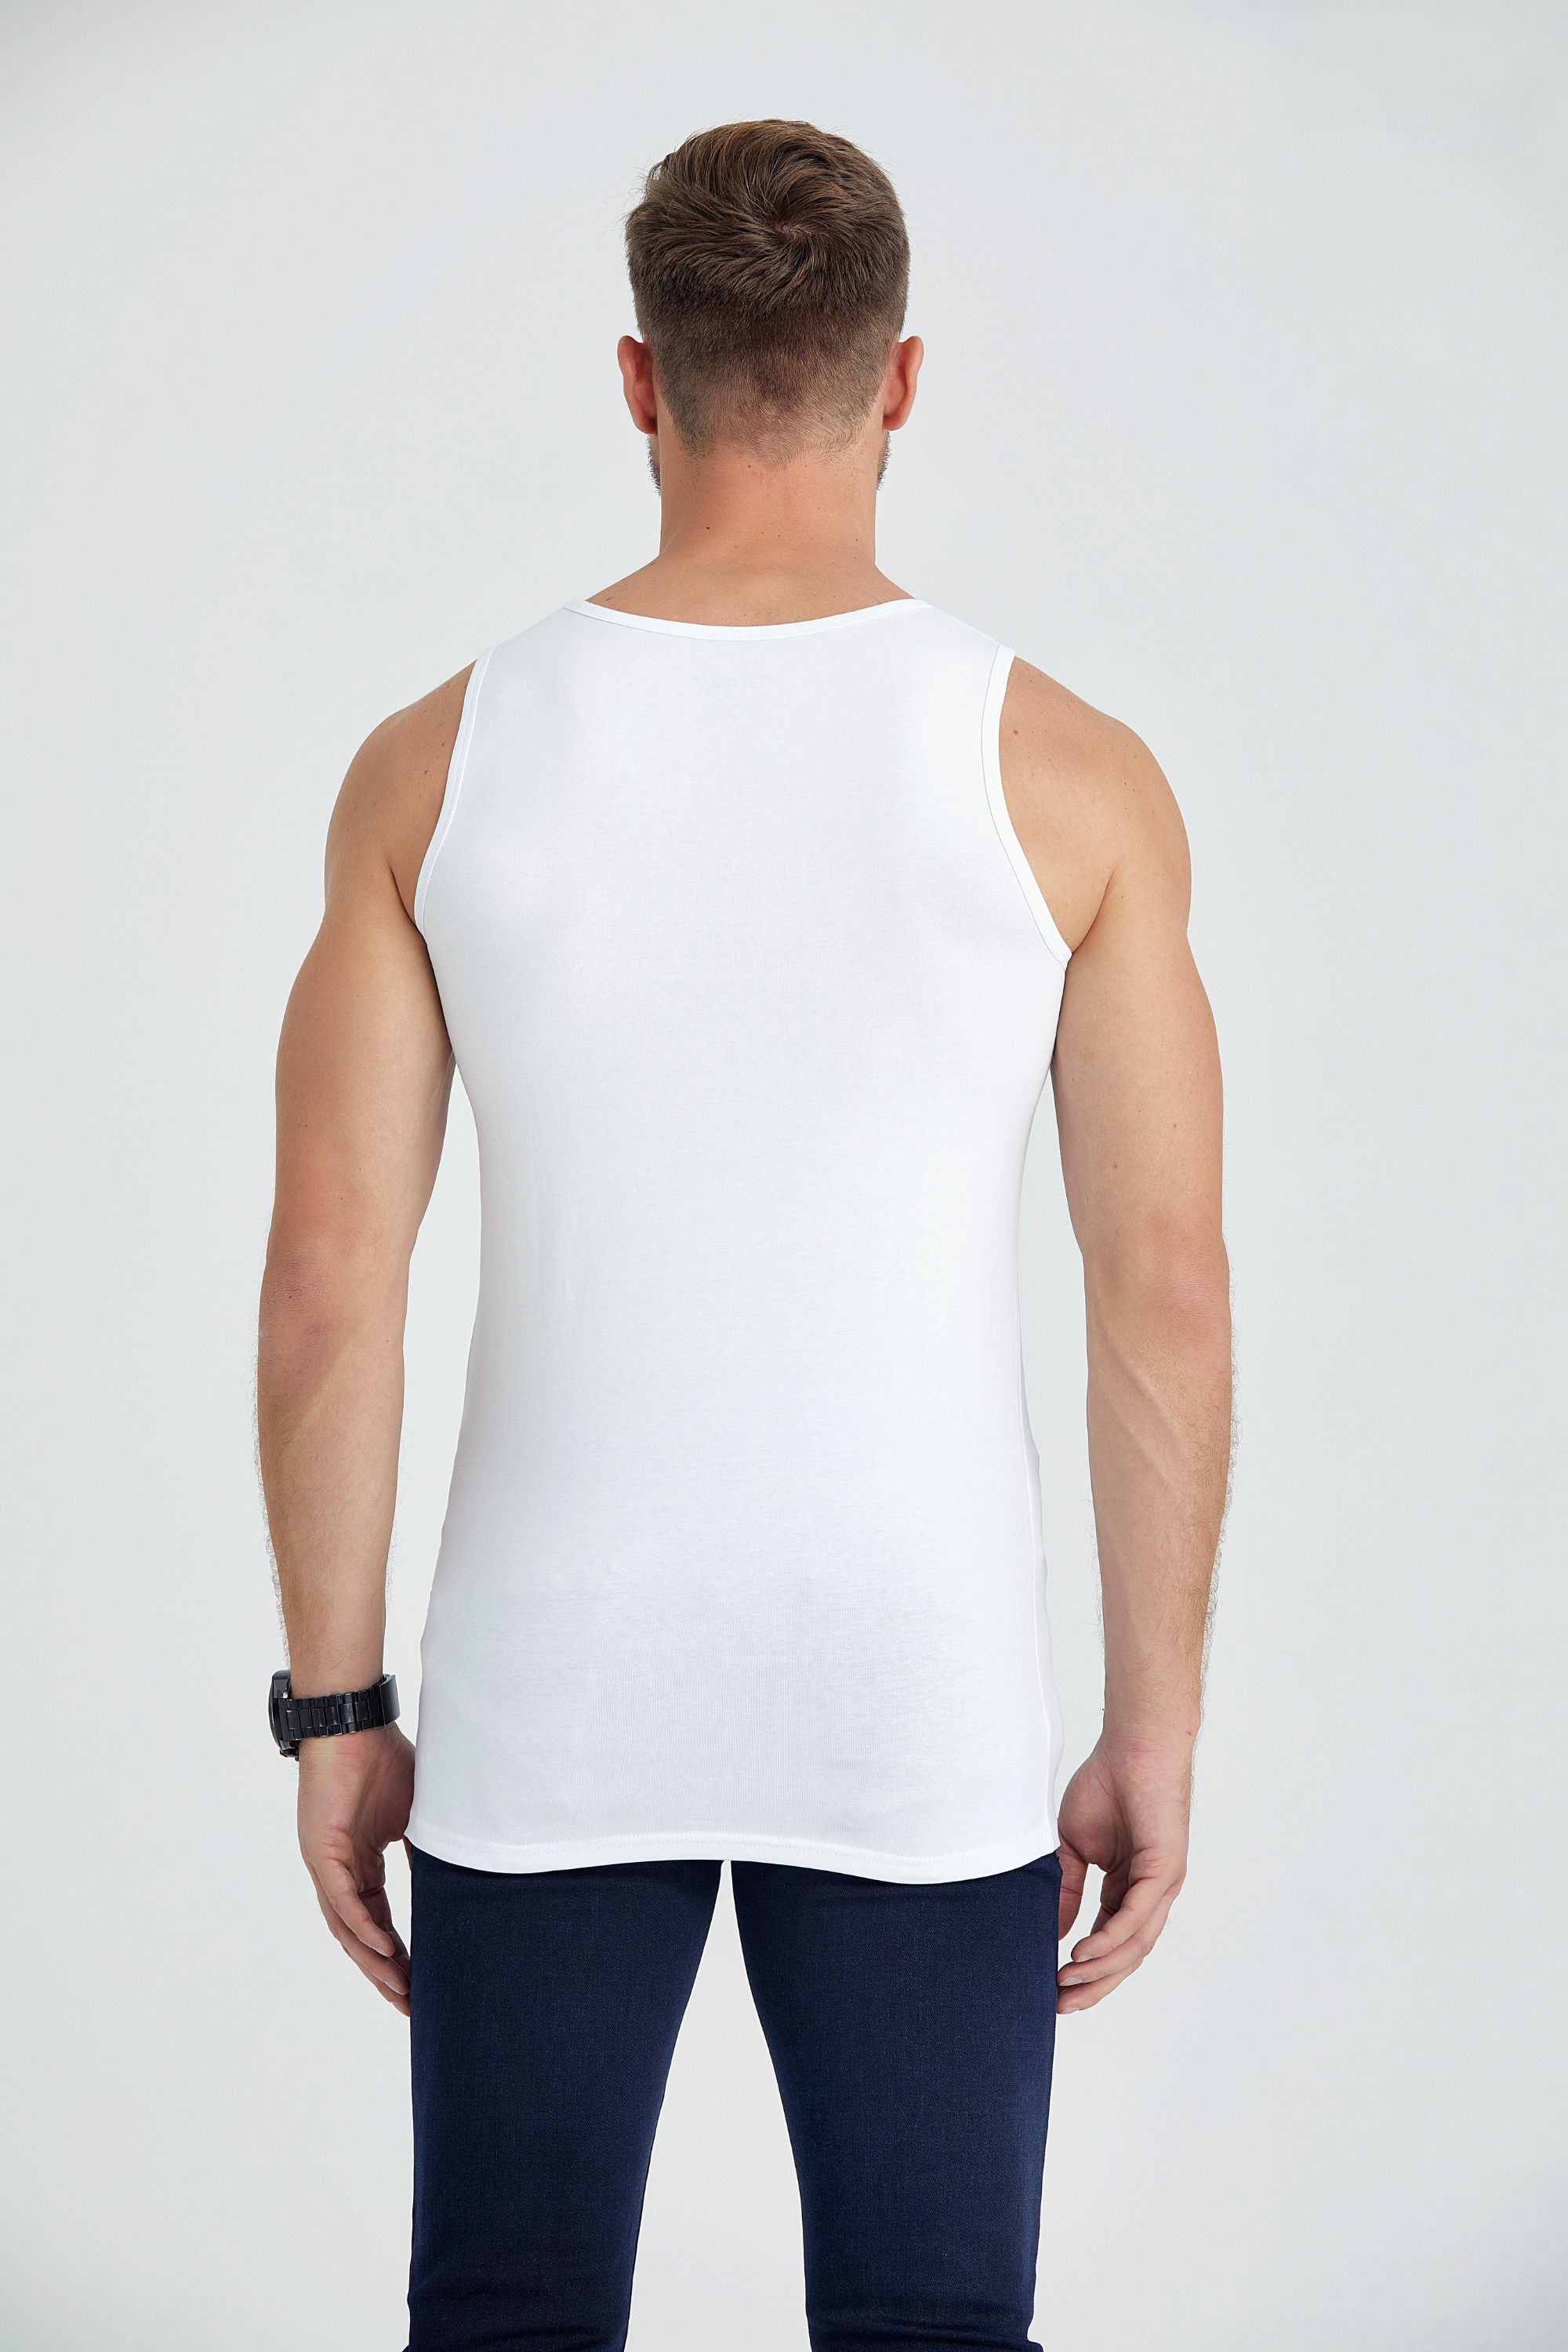 singlet slim long fit undershirt white